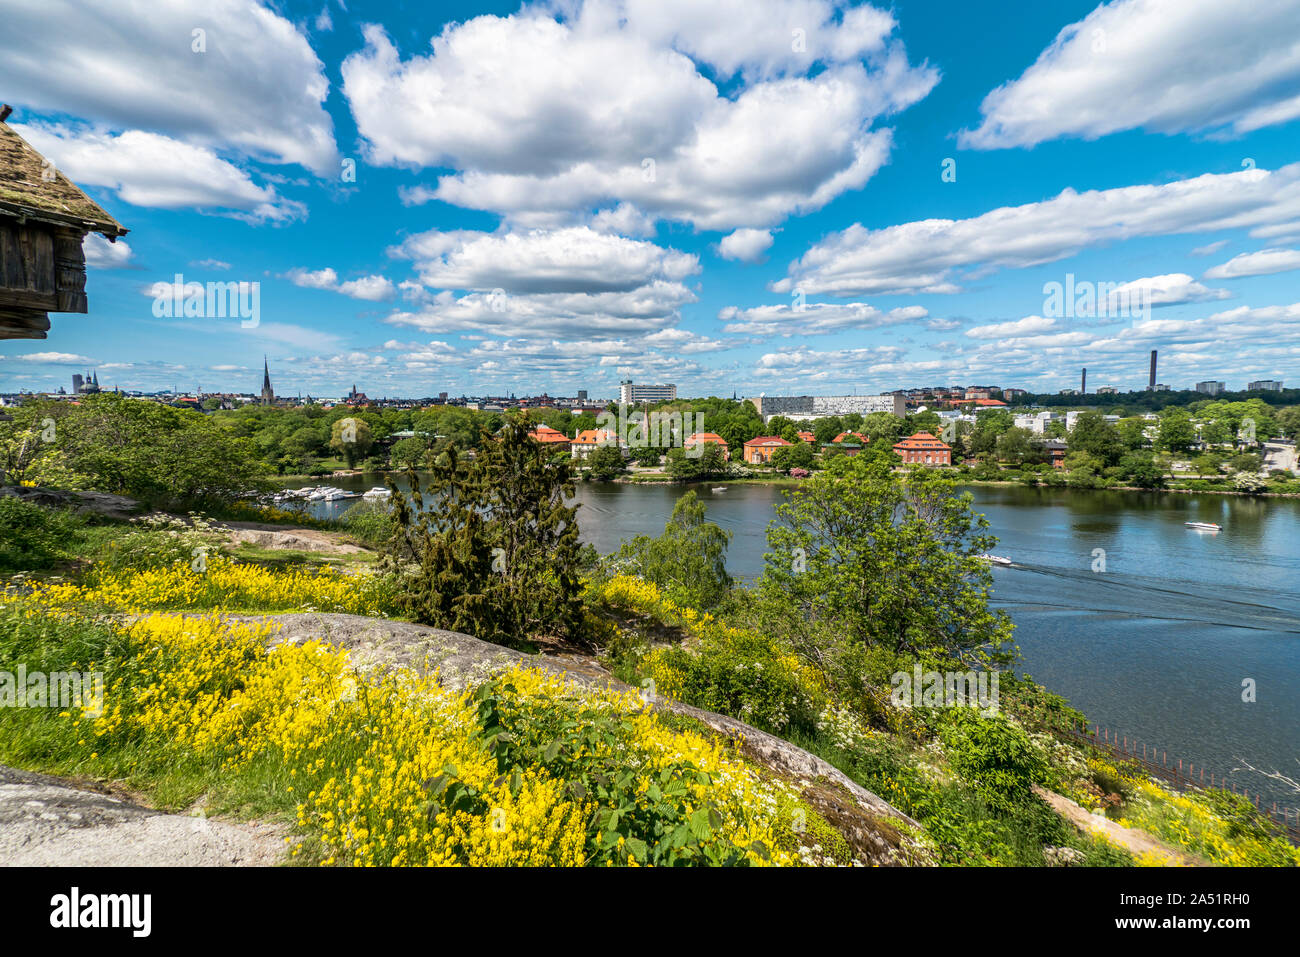 The city center seen from river along Skansen Open-Air Museum, Stockholm, Sweden Stock Photo